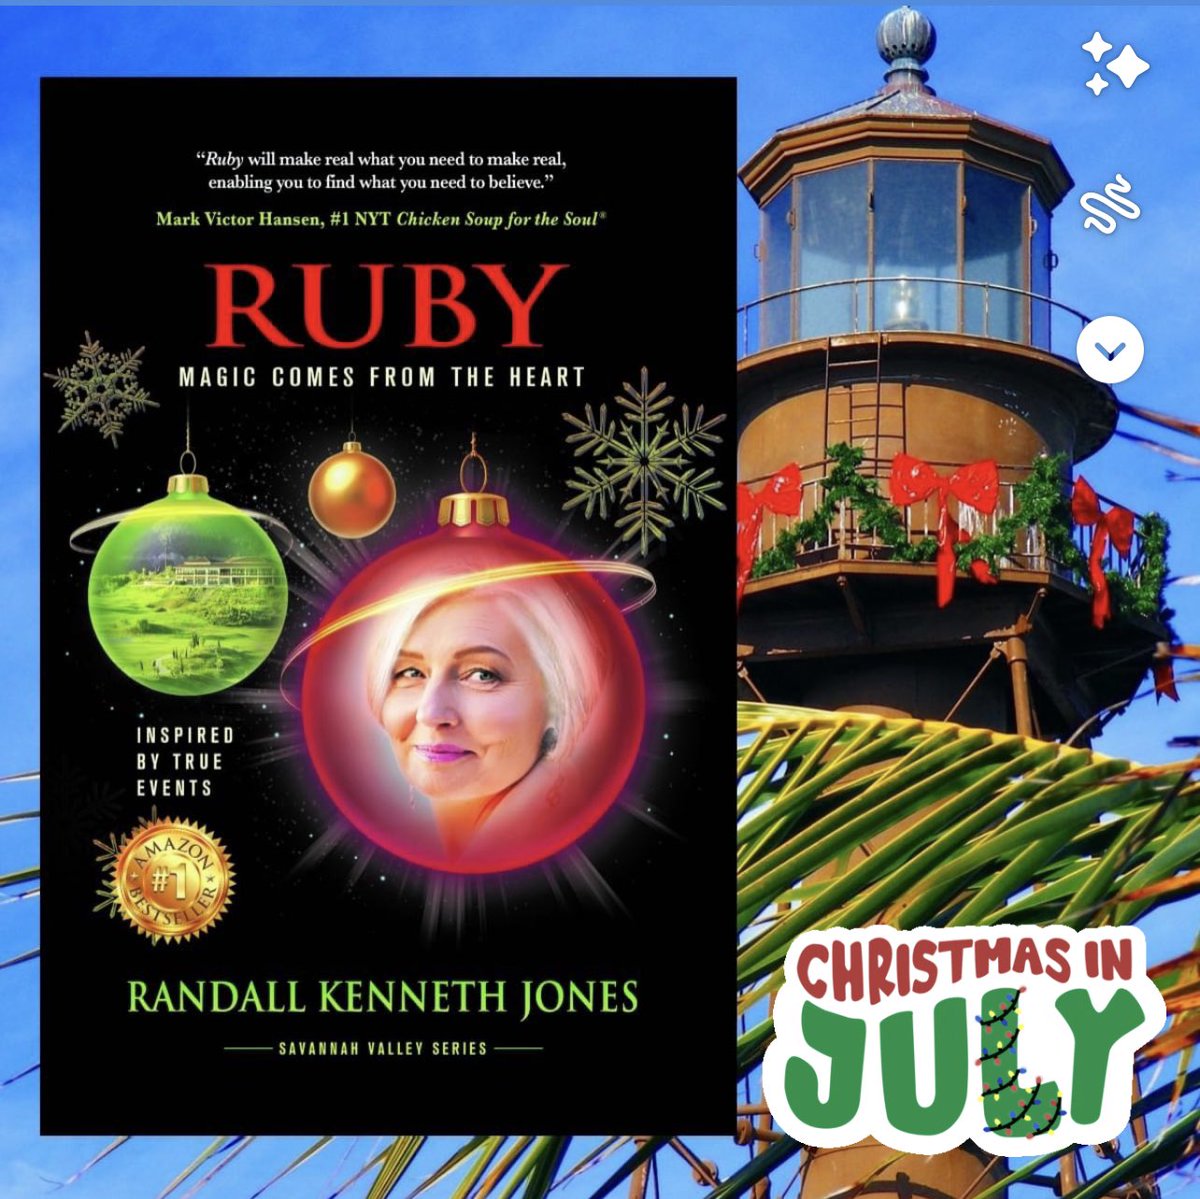 #ChristmasInJuly #HolidaysBook #NonholidayBook #ReadNow #IAmReading #Bibliophiles #Mystery #GhostStory #SavannahGeorgia #Savannah #Spirituality #Christmas #JonesingForGood #Inspirational #Funny #Unexpected GO HERE: RubyBook.info